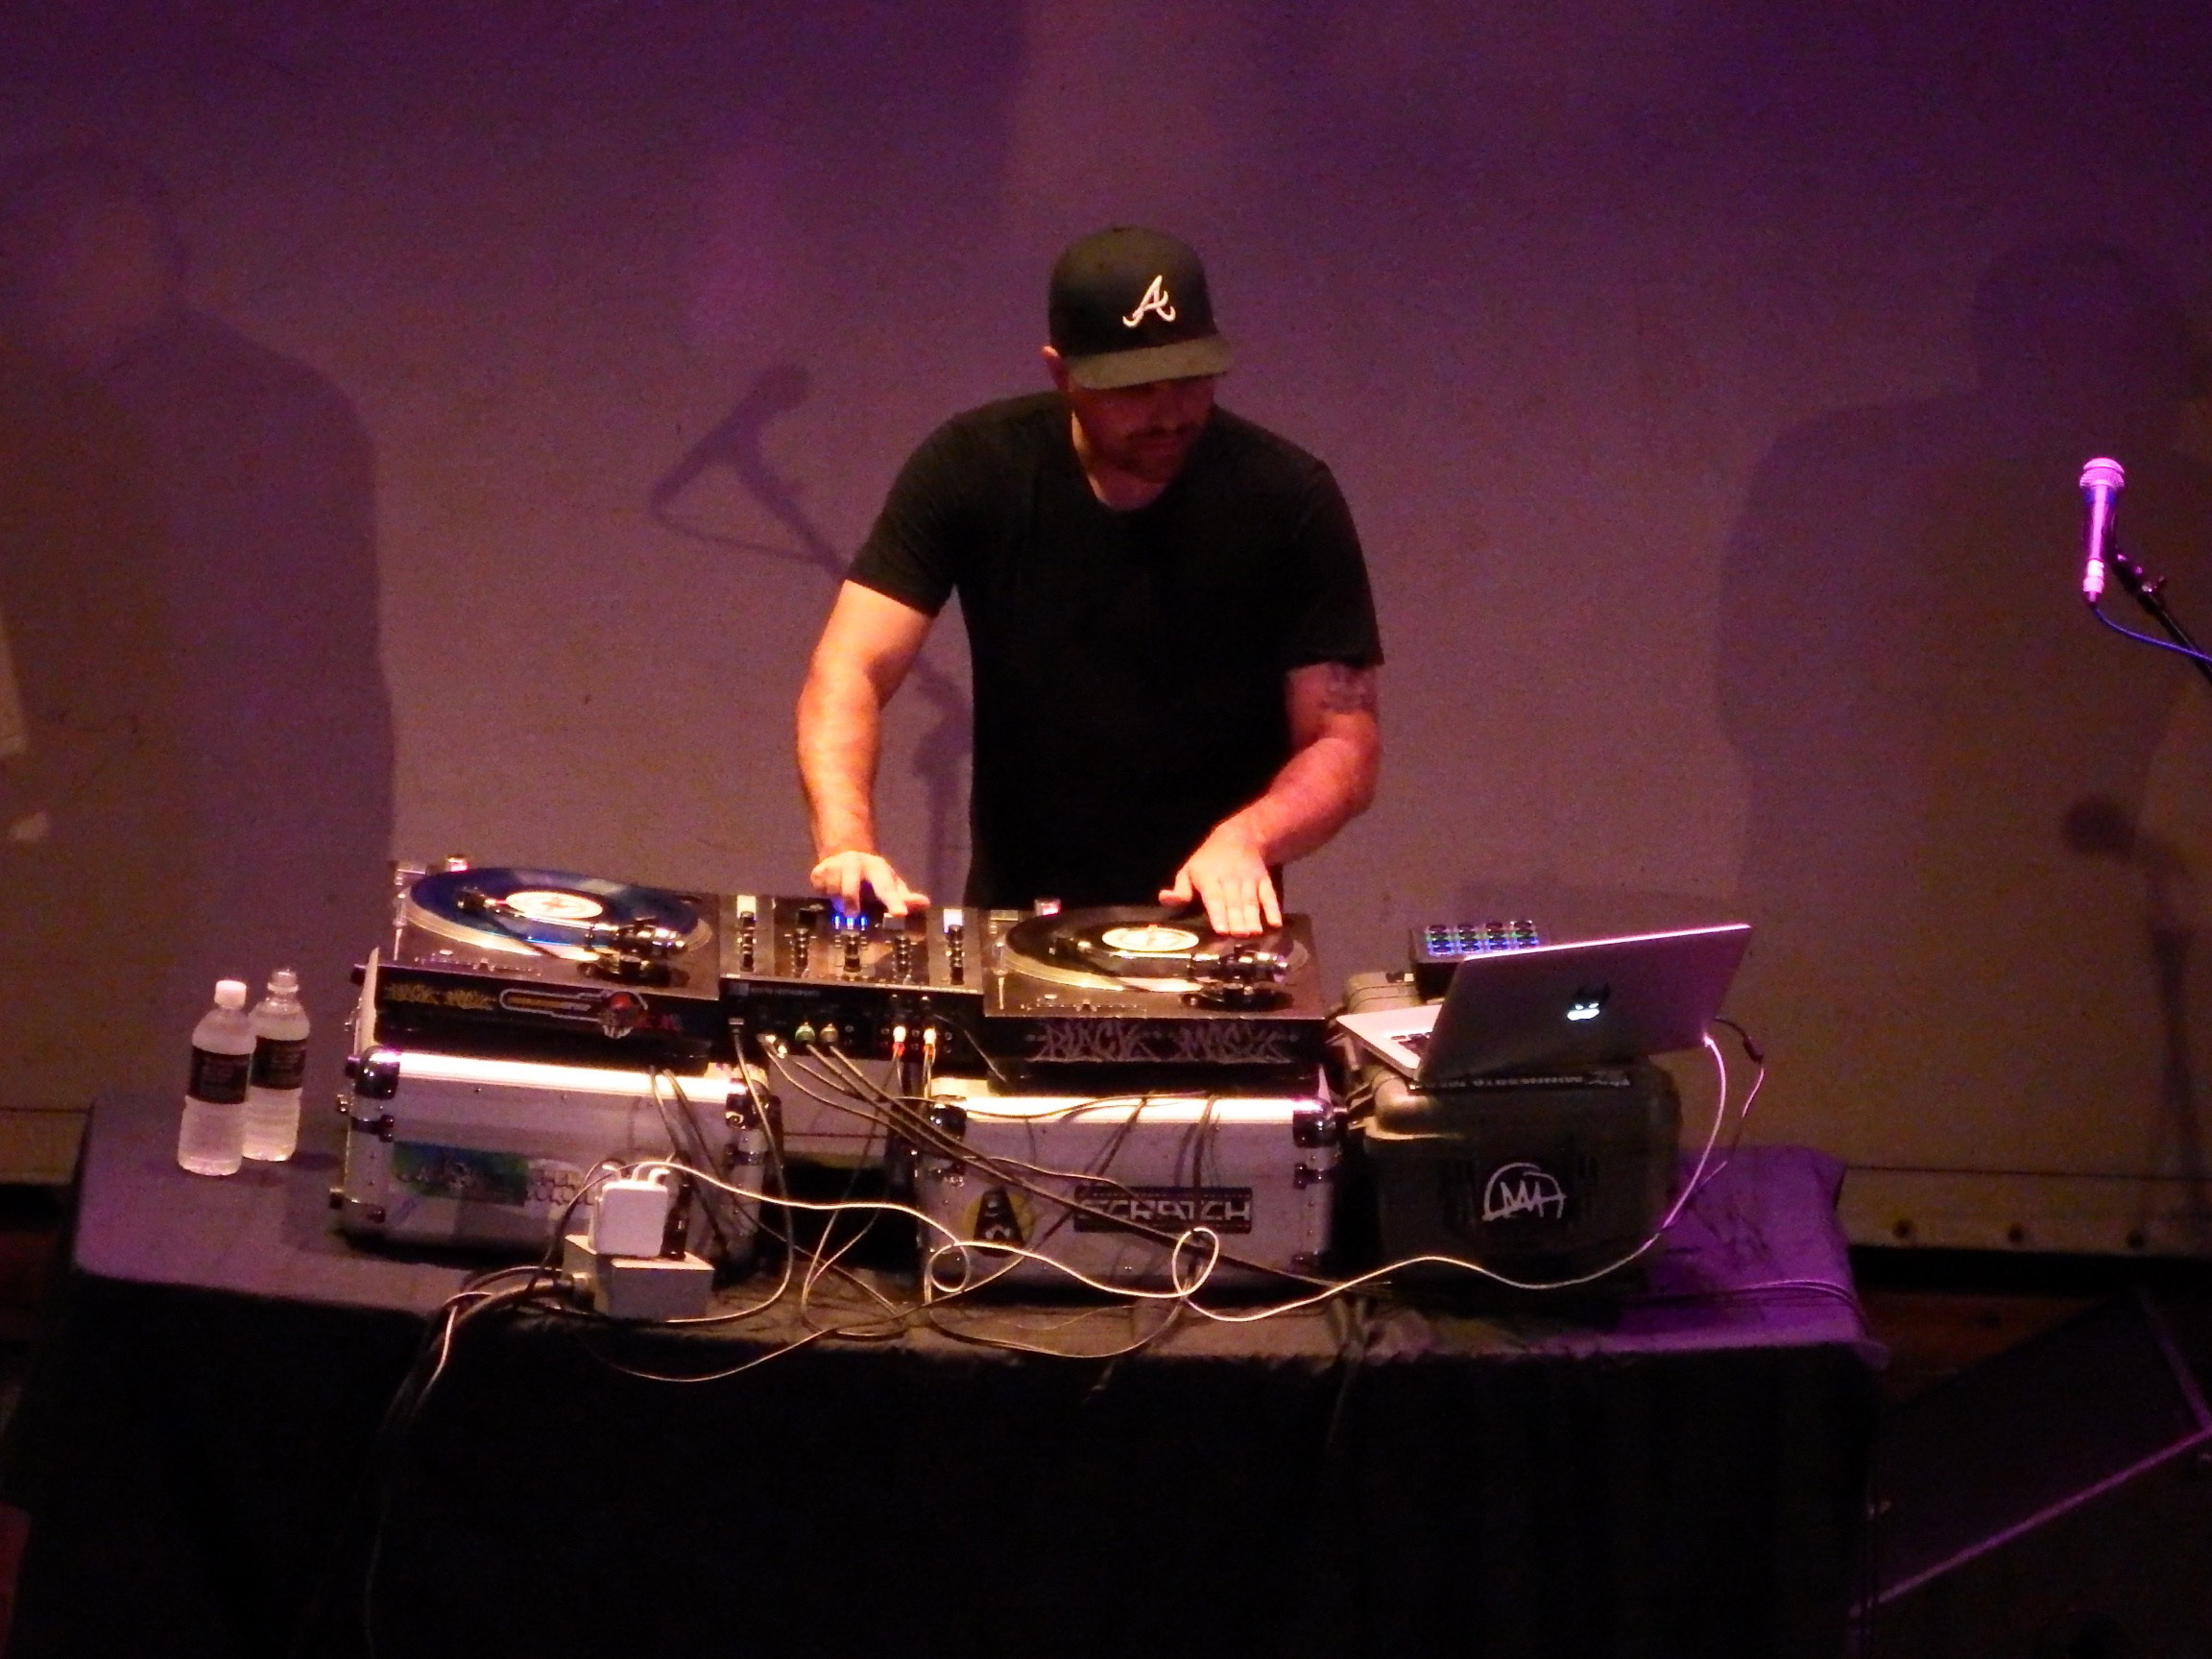 DJ Abilities